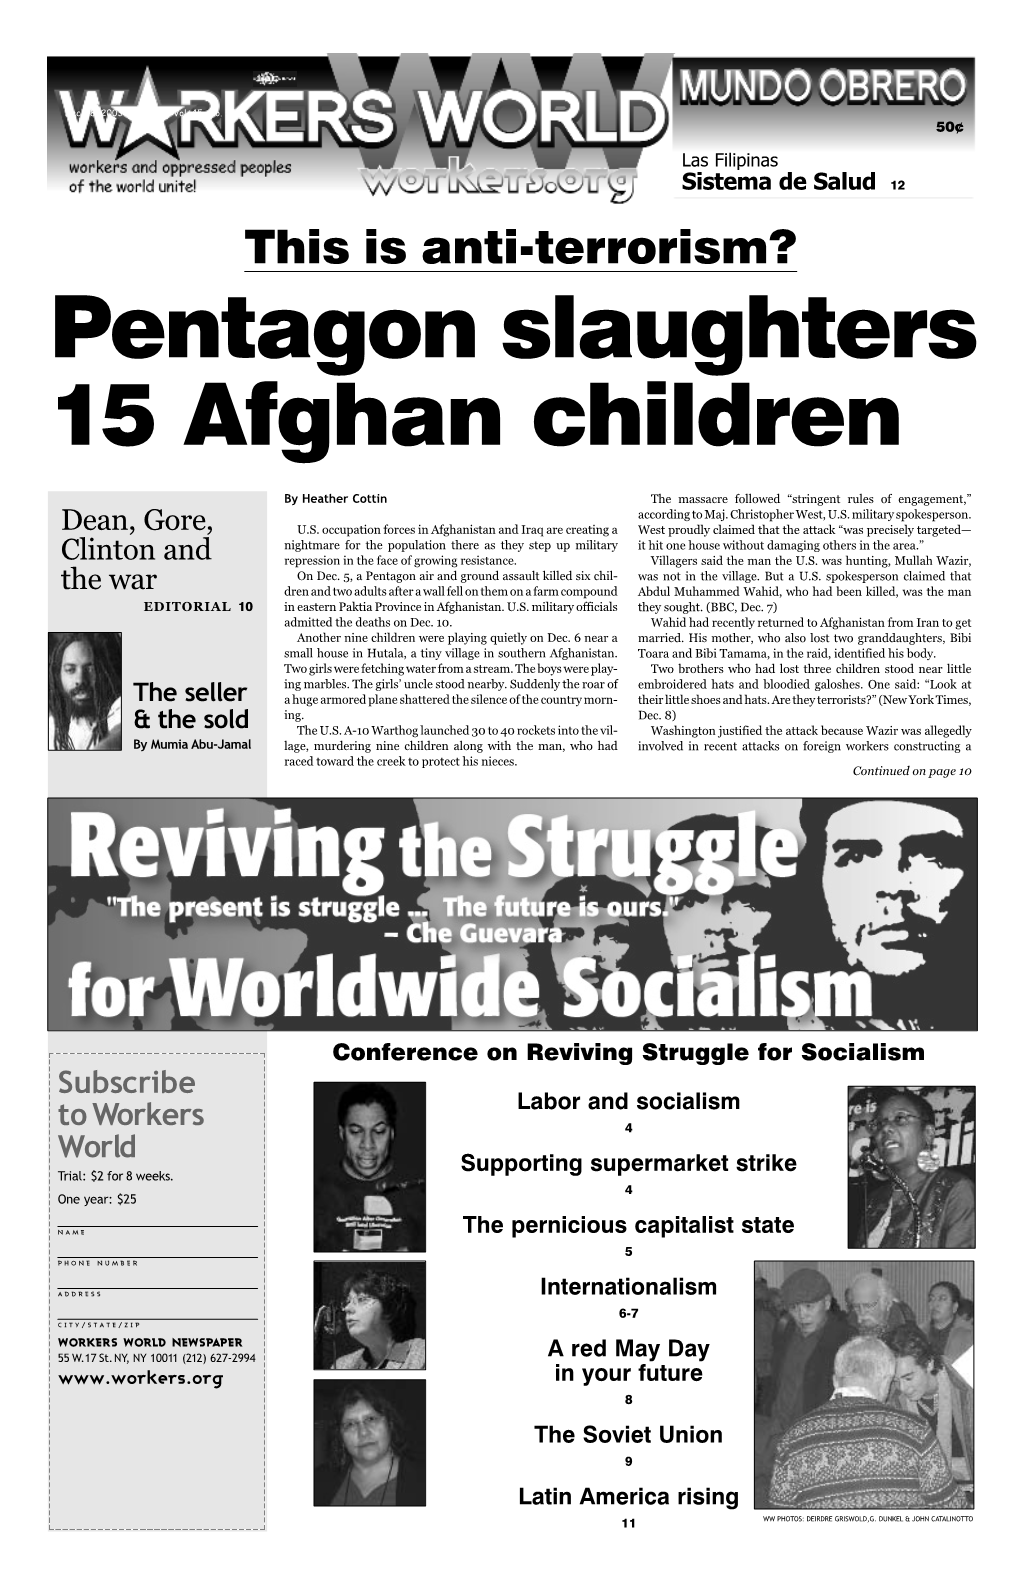 Pentagon Slaughters 15 Afghan Children